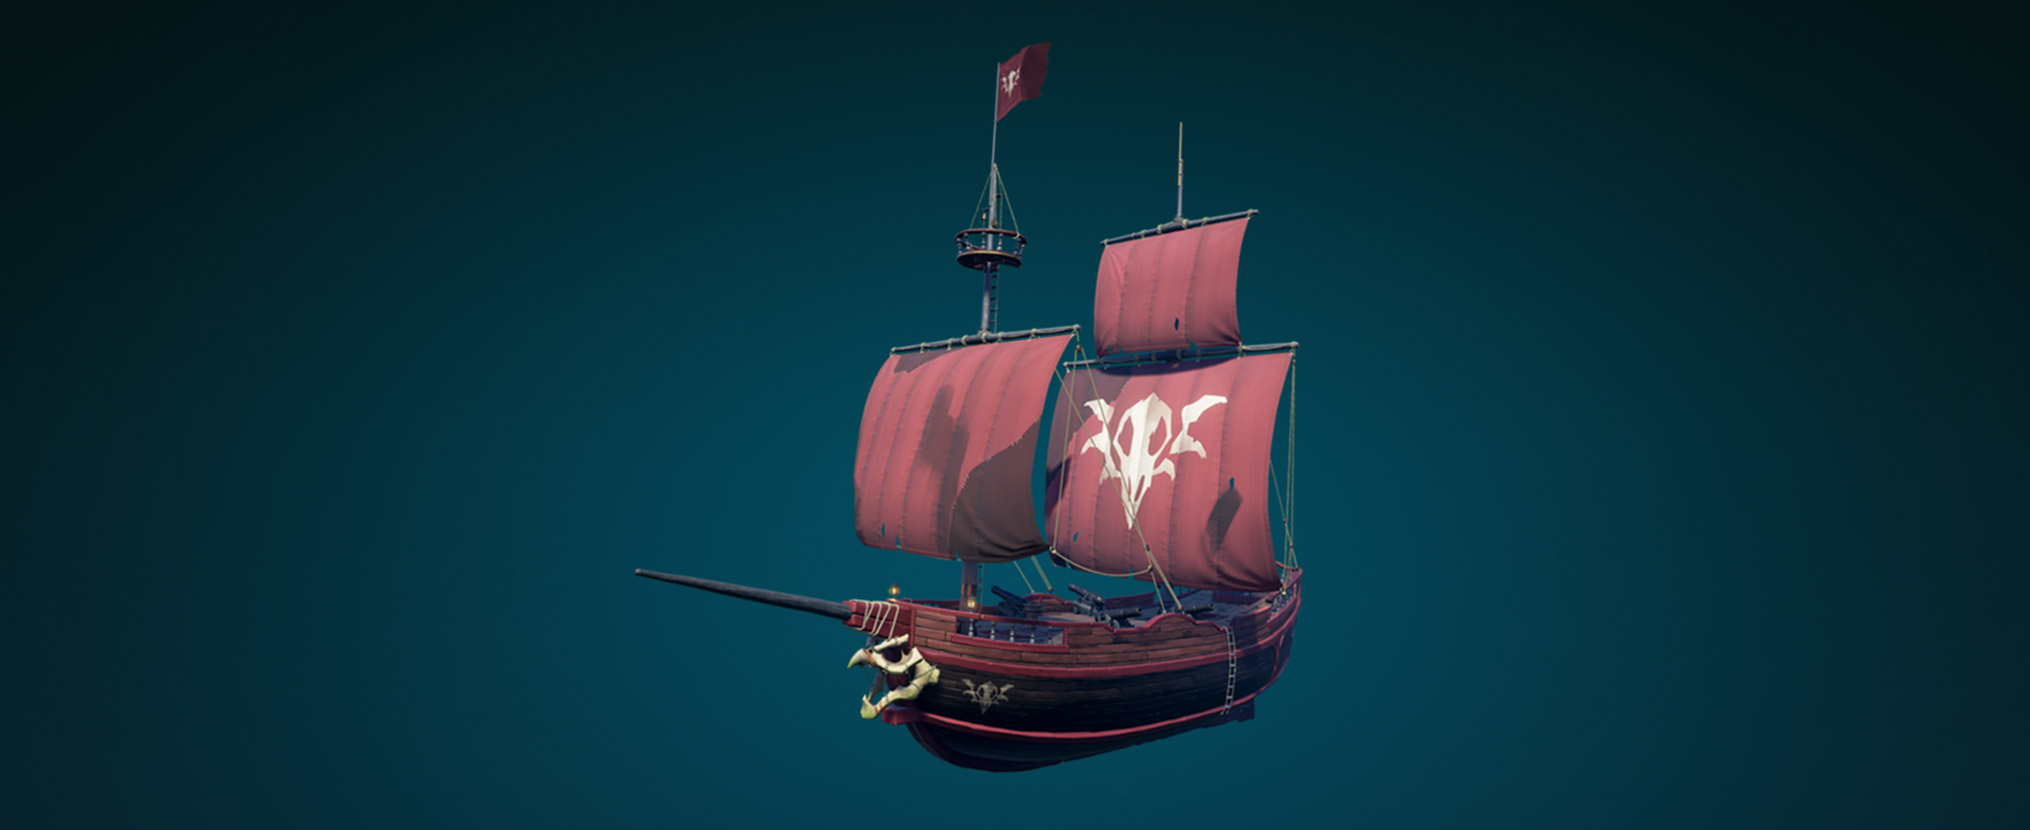 Sea of Thieves - Cursed Sails Campaign Guide - Rare Thief